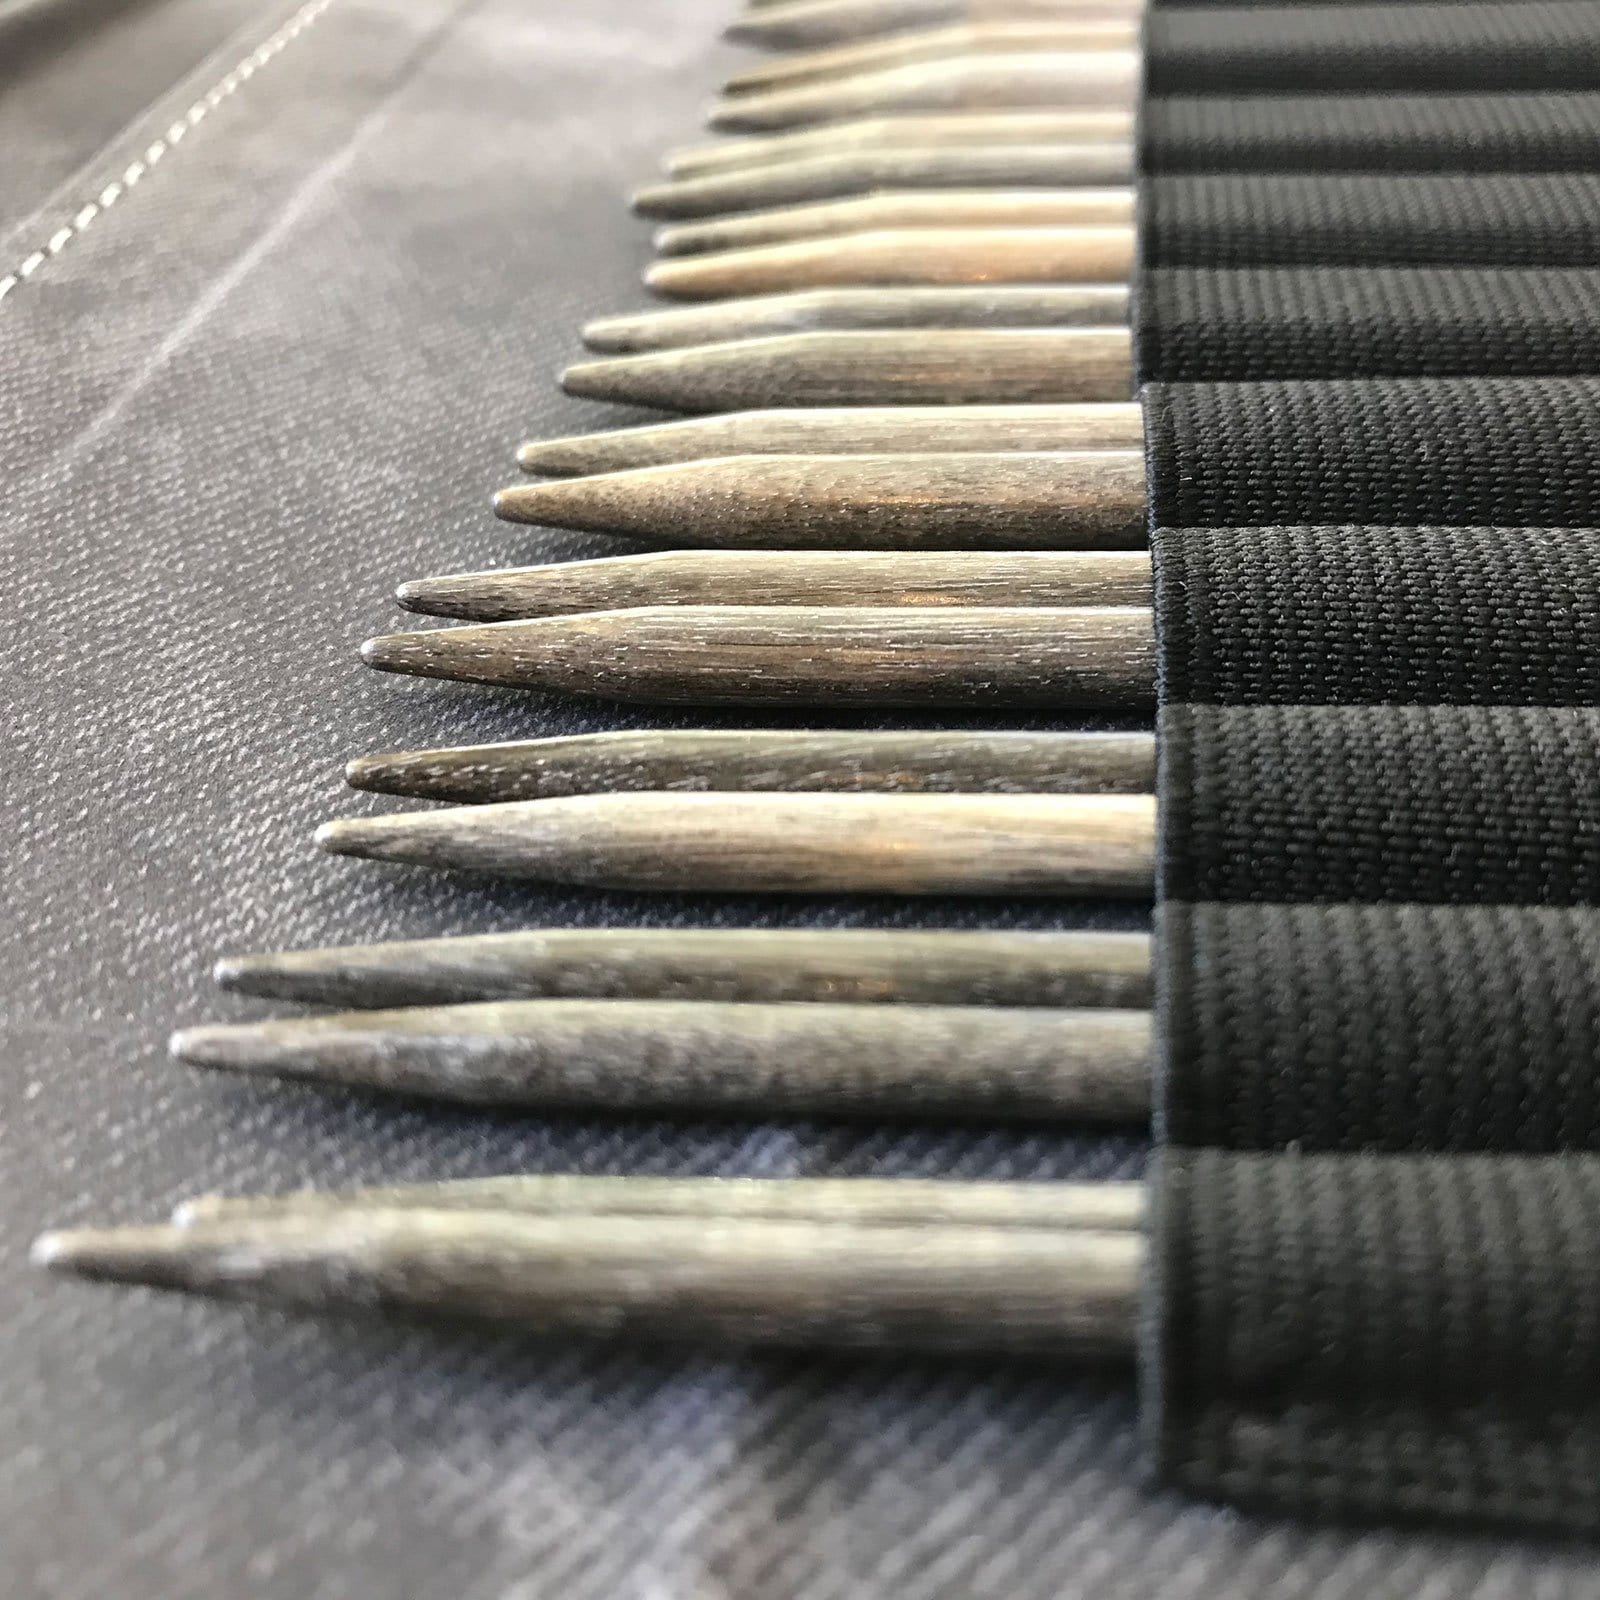 Lykke Driftwood 5 inch Interchangeable Knitting Needle Set - Grey Denim